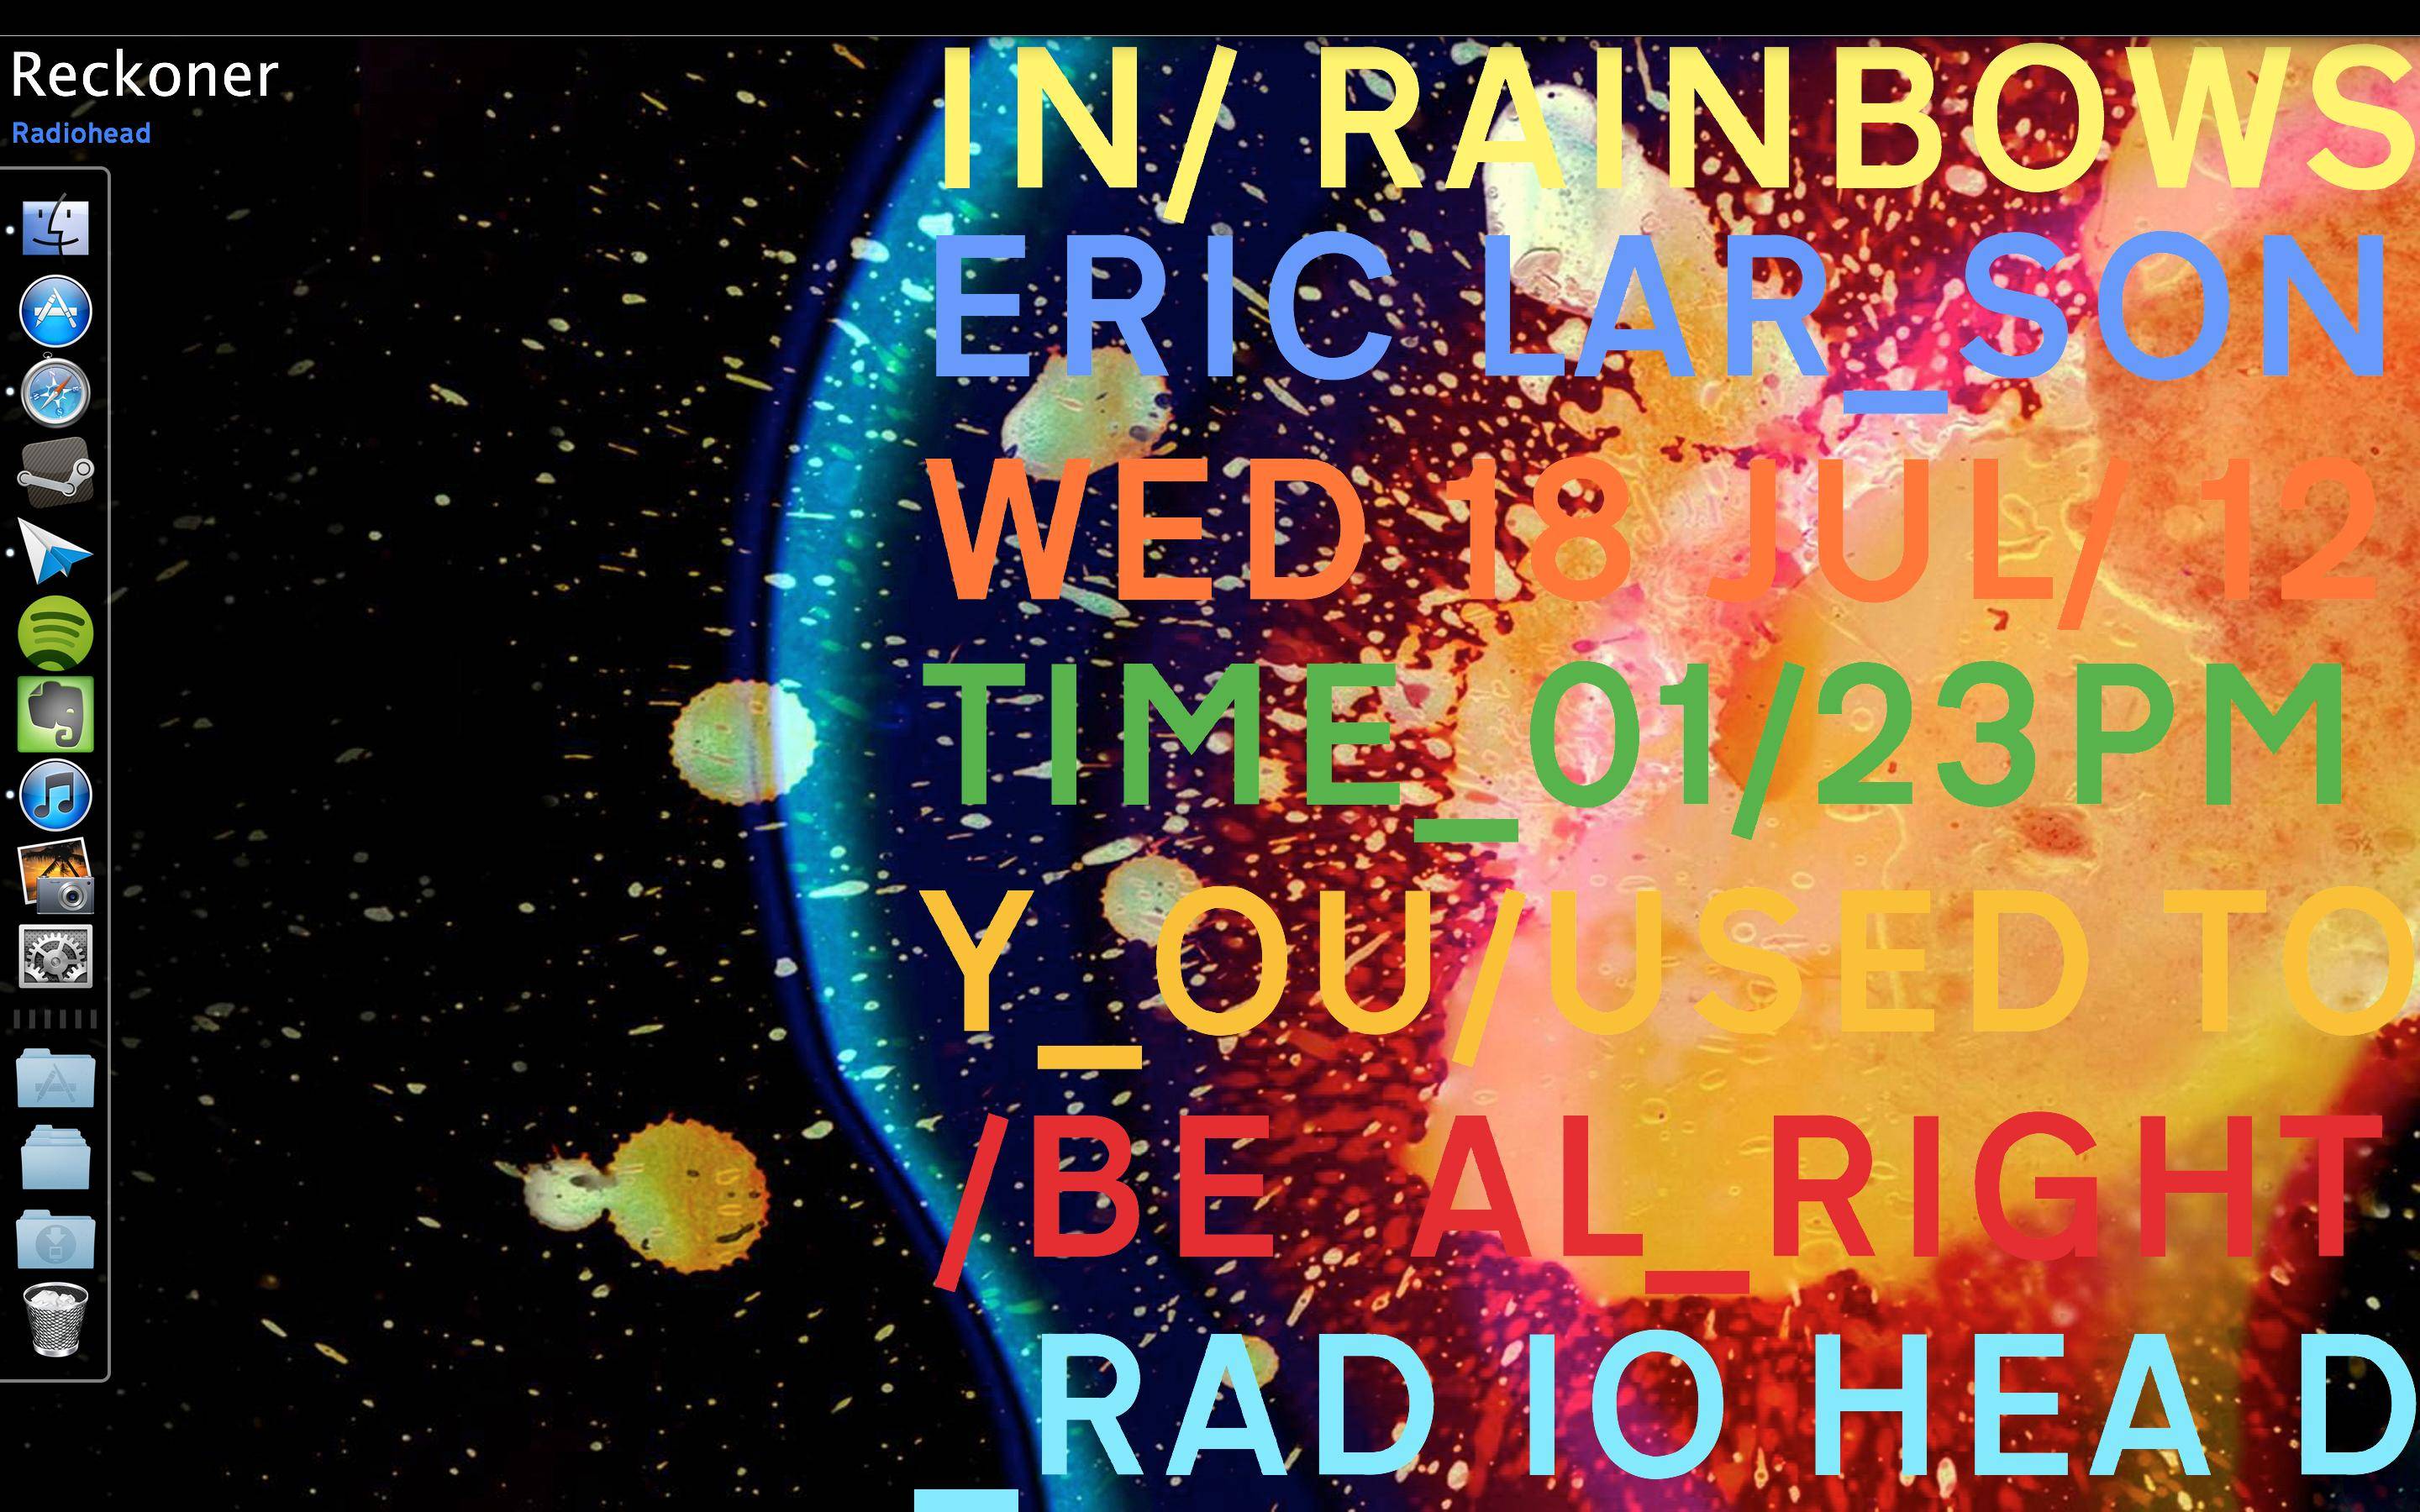 Week of reddit.com/r/radiohead (Sunday 7/15 - Saturday 7/21)